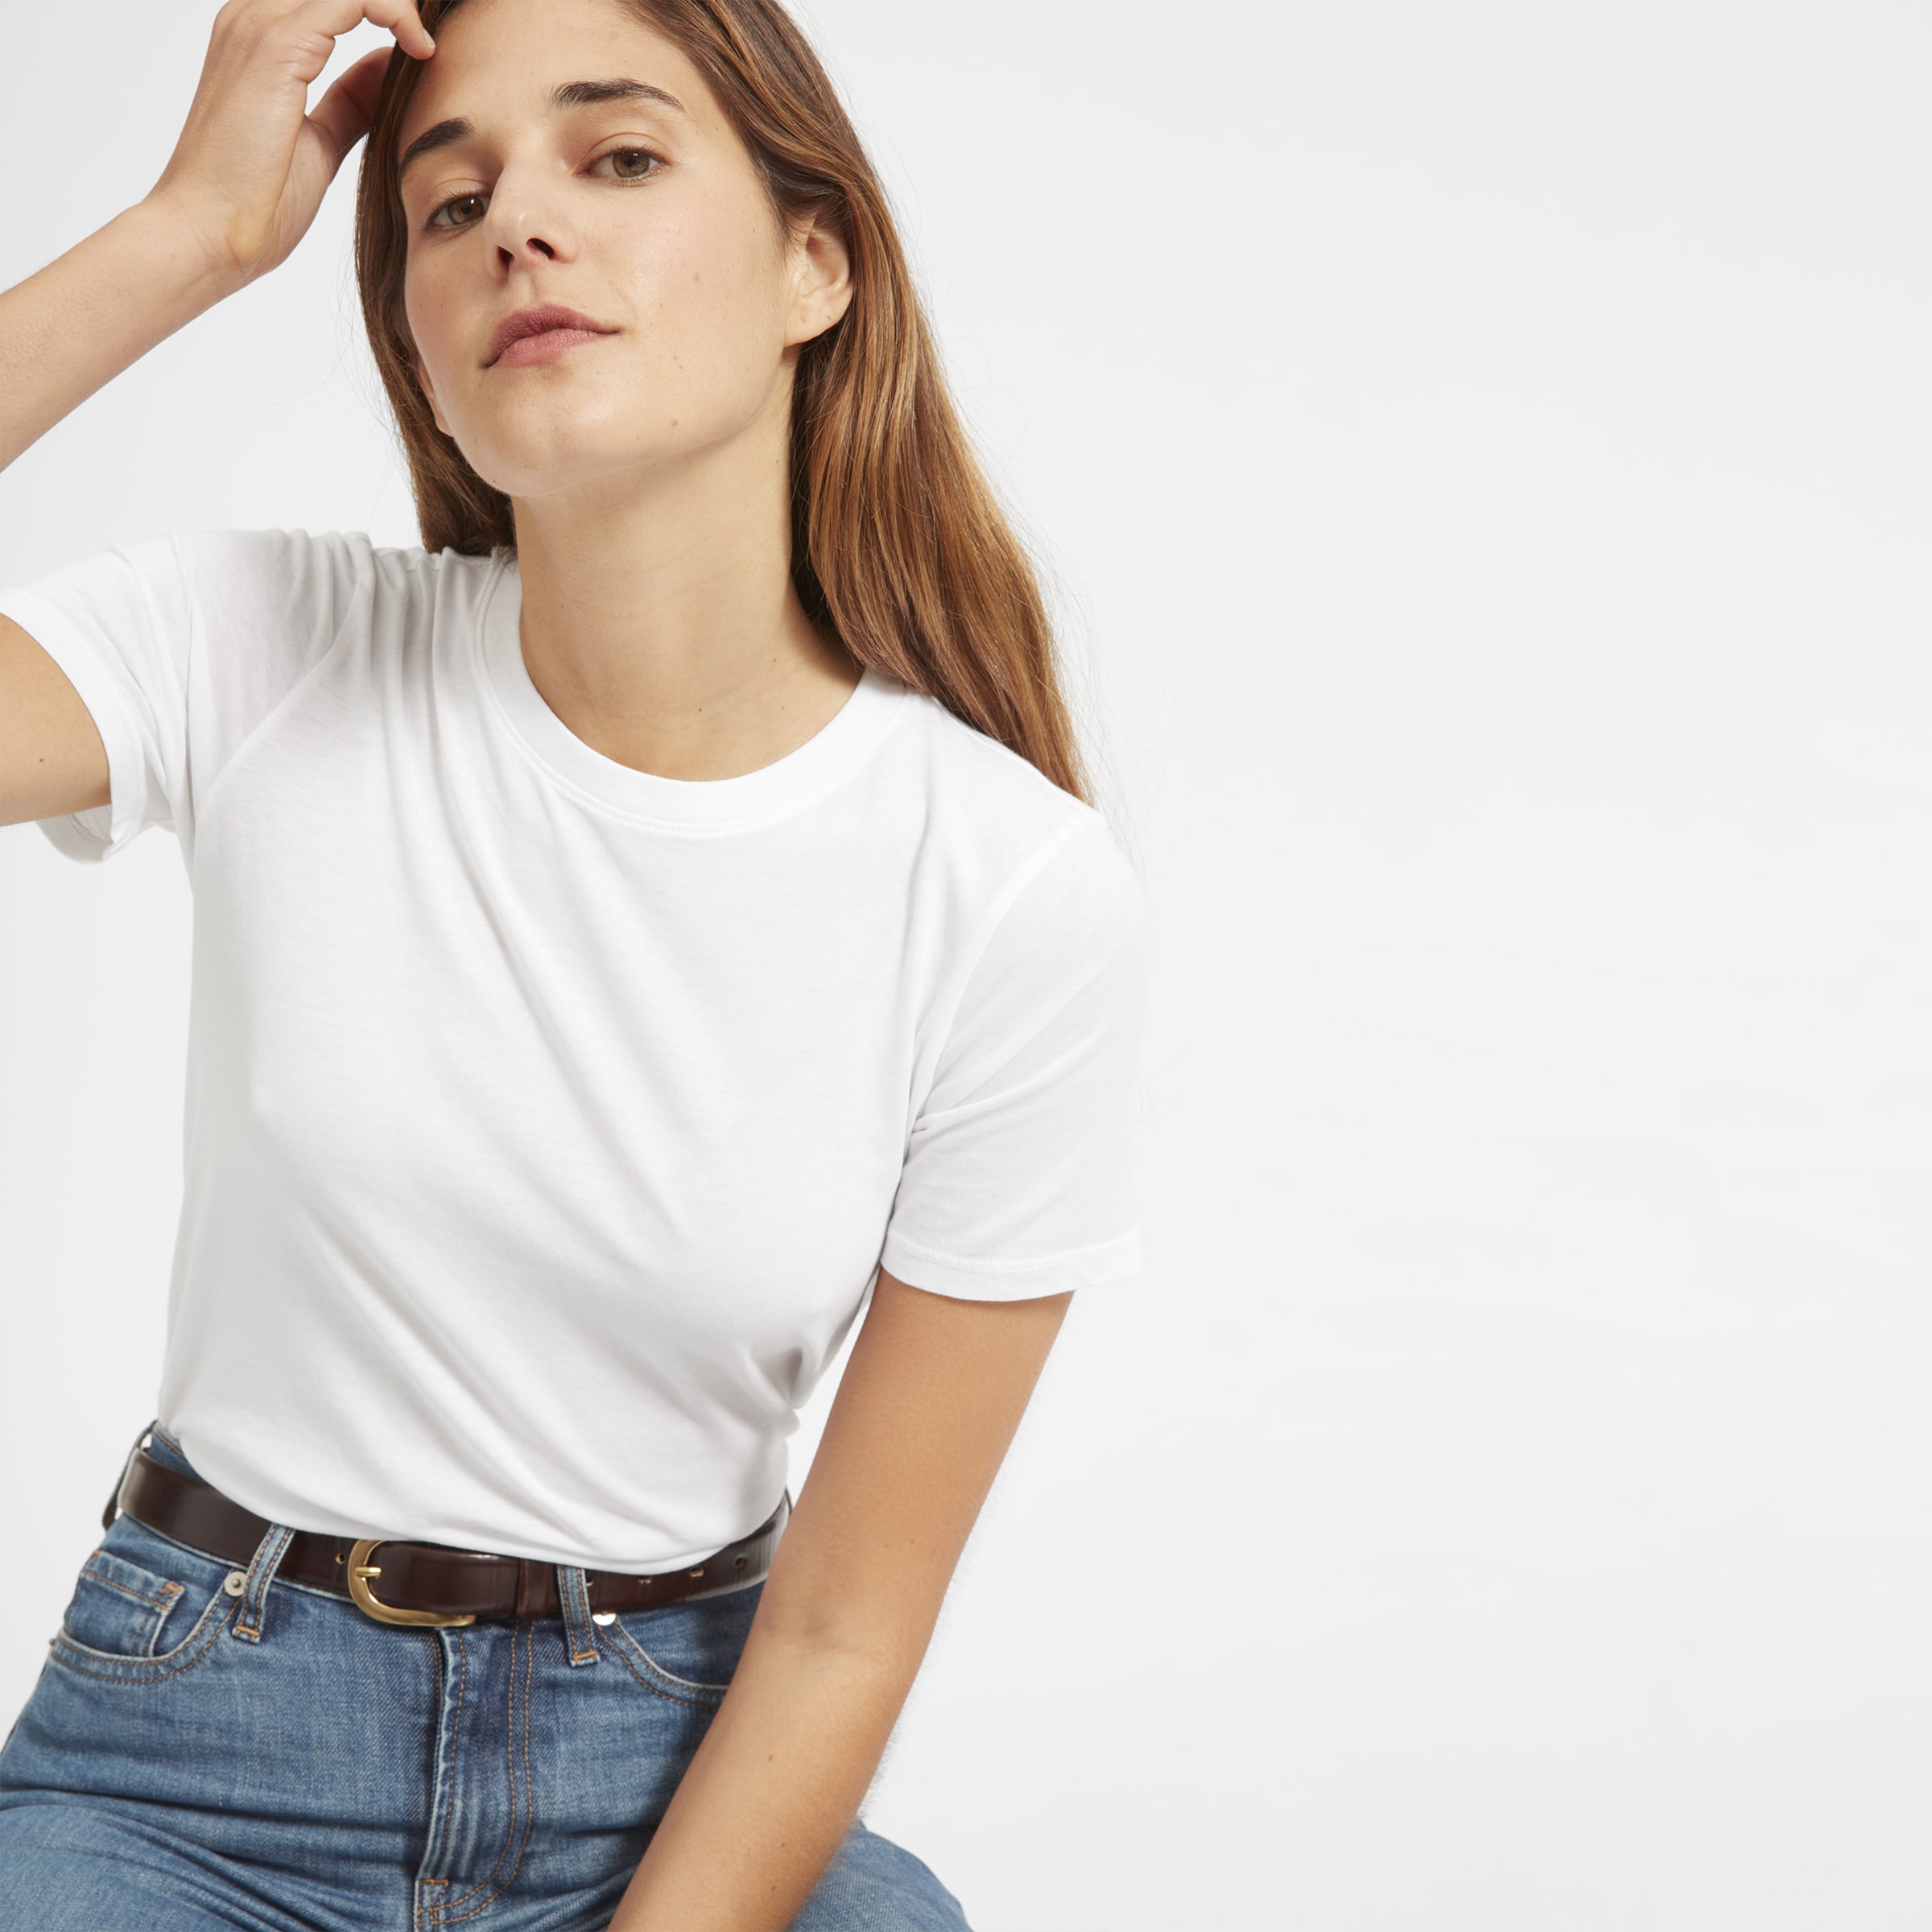 Women's Tops, T-Shirts, Blouses & Shirts – Everlane